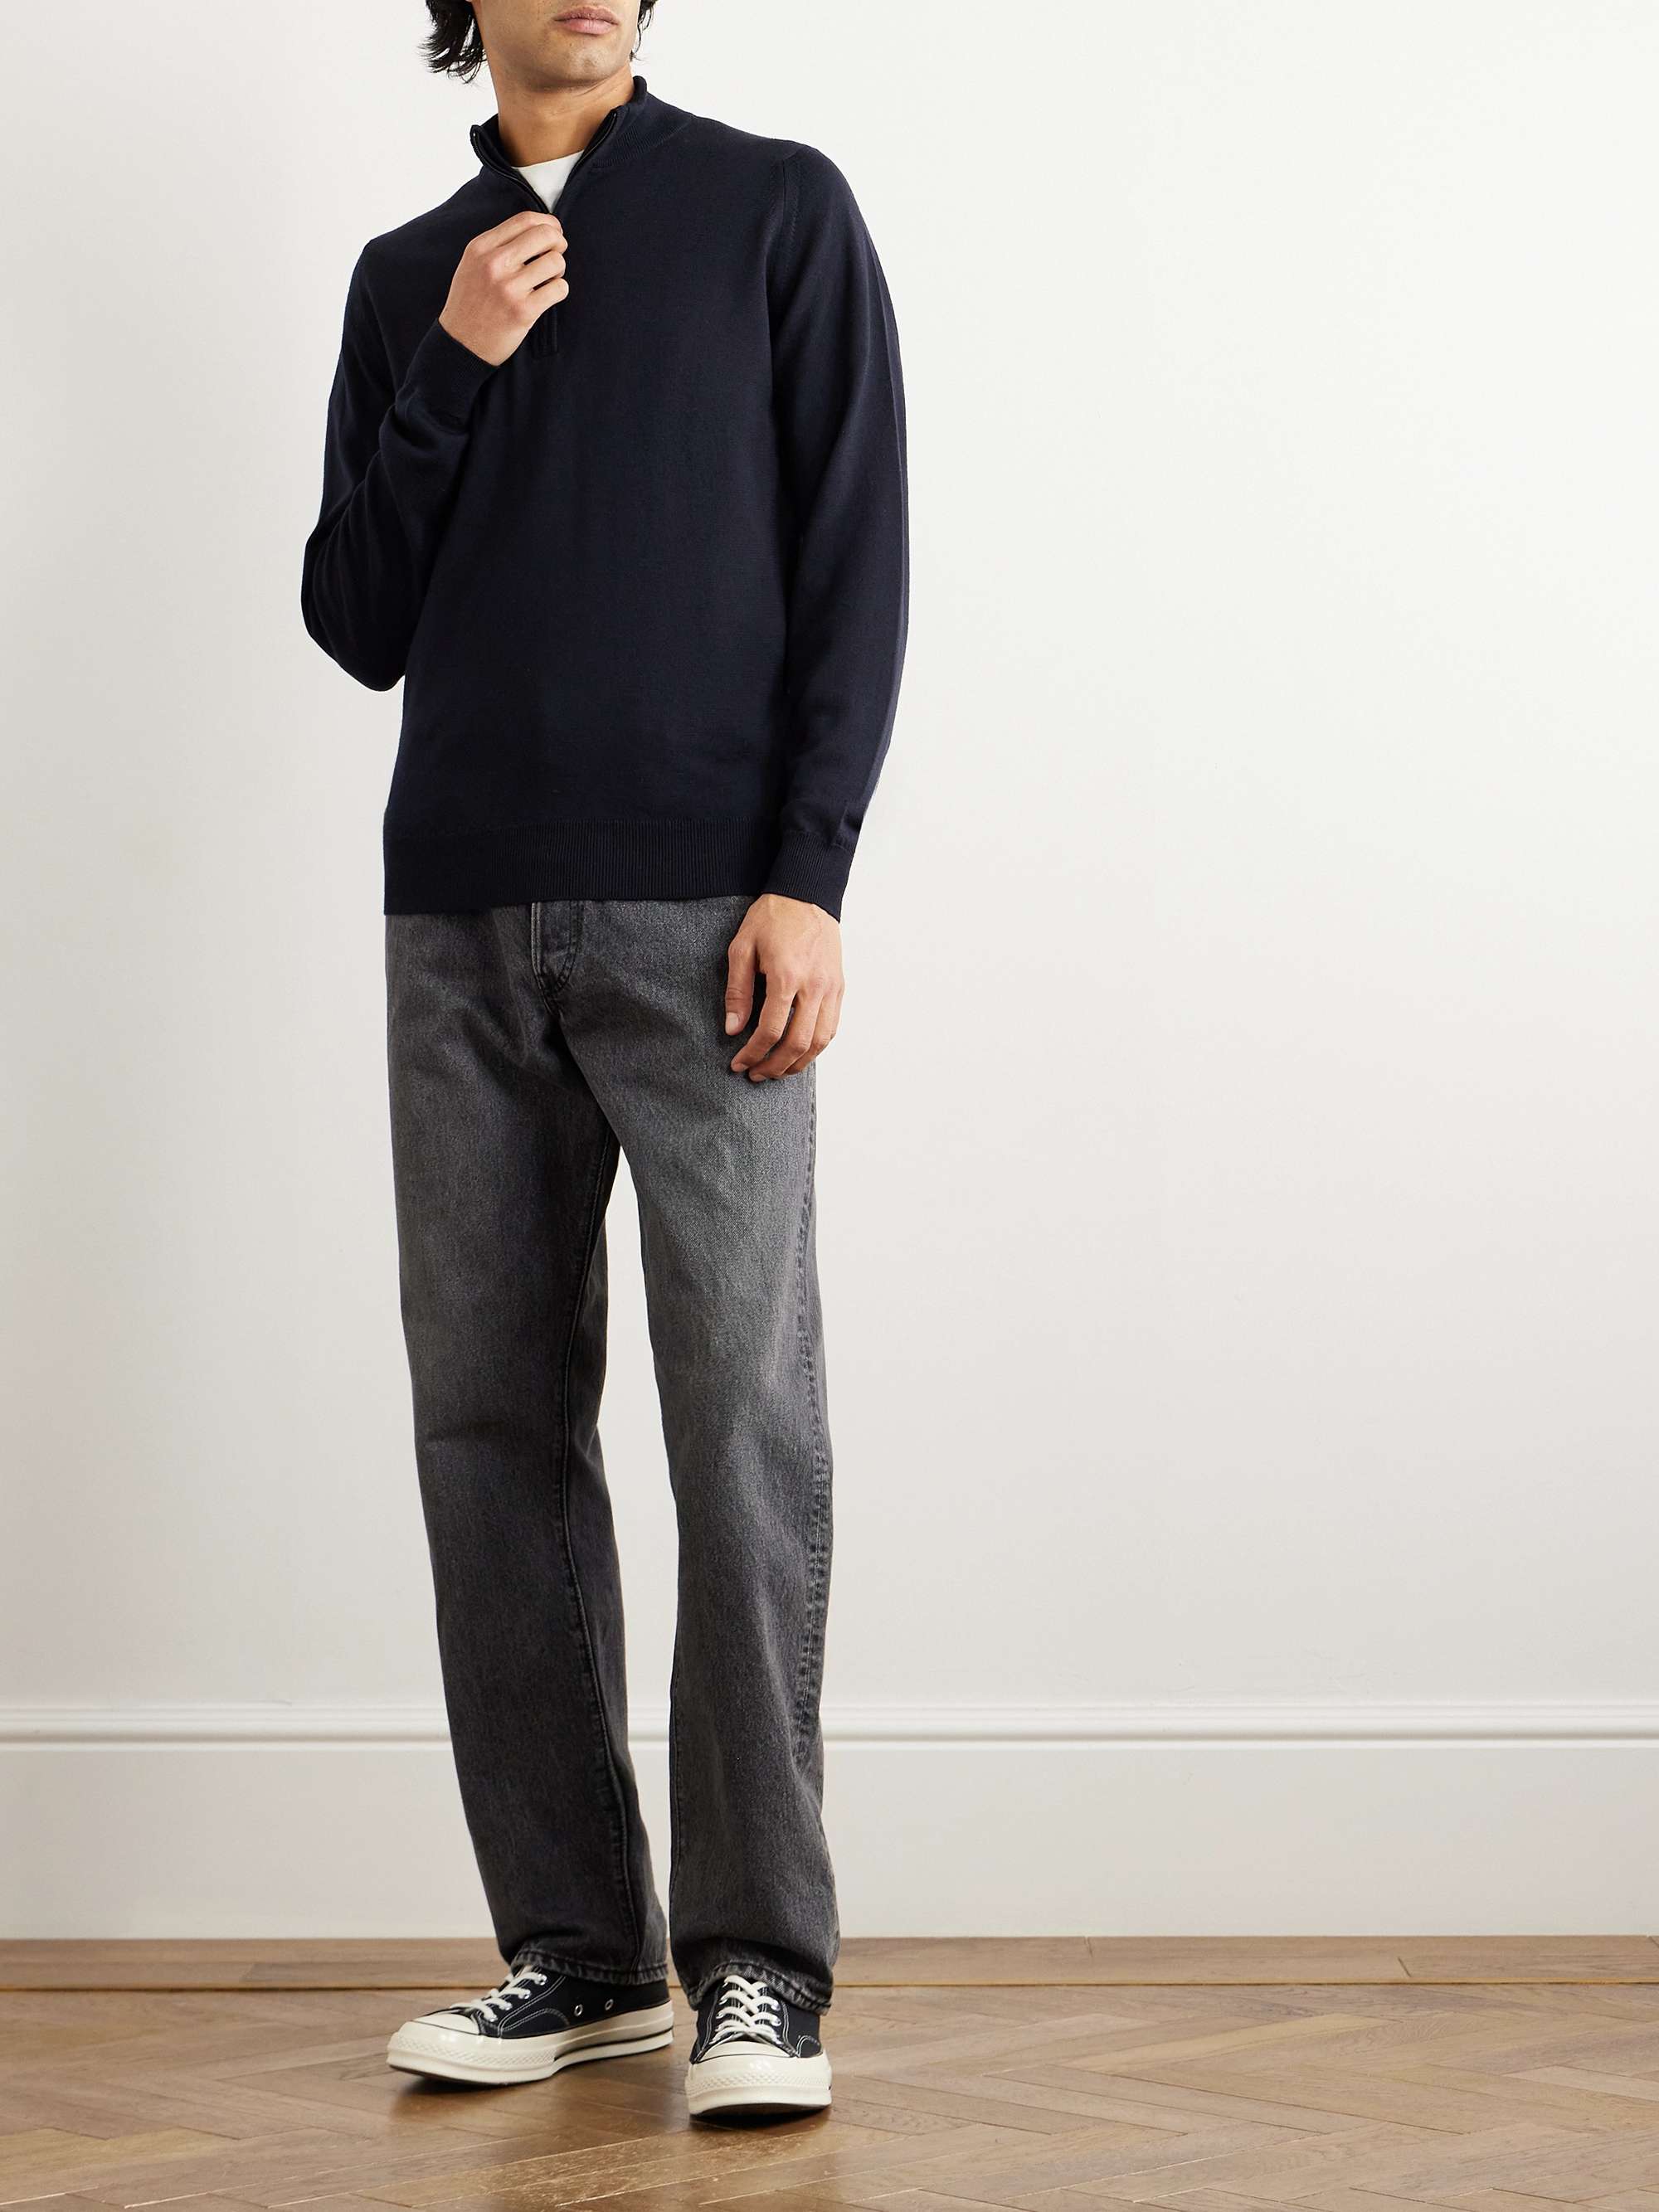 JOHN SMEDLEY Tapton Slim-Fit Merino Wool Half-Zip Sweater | MR PORTER